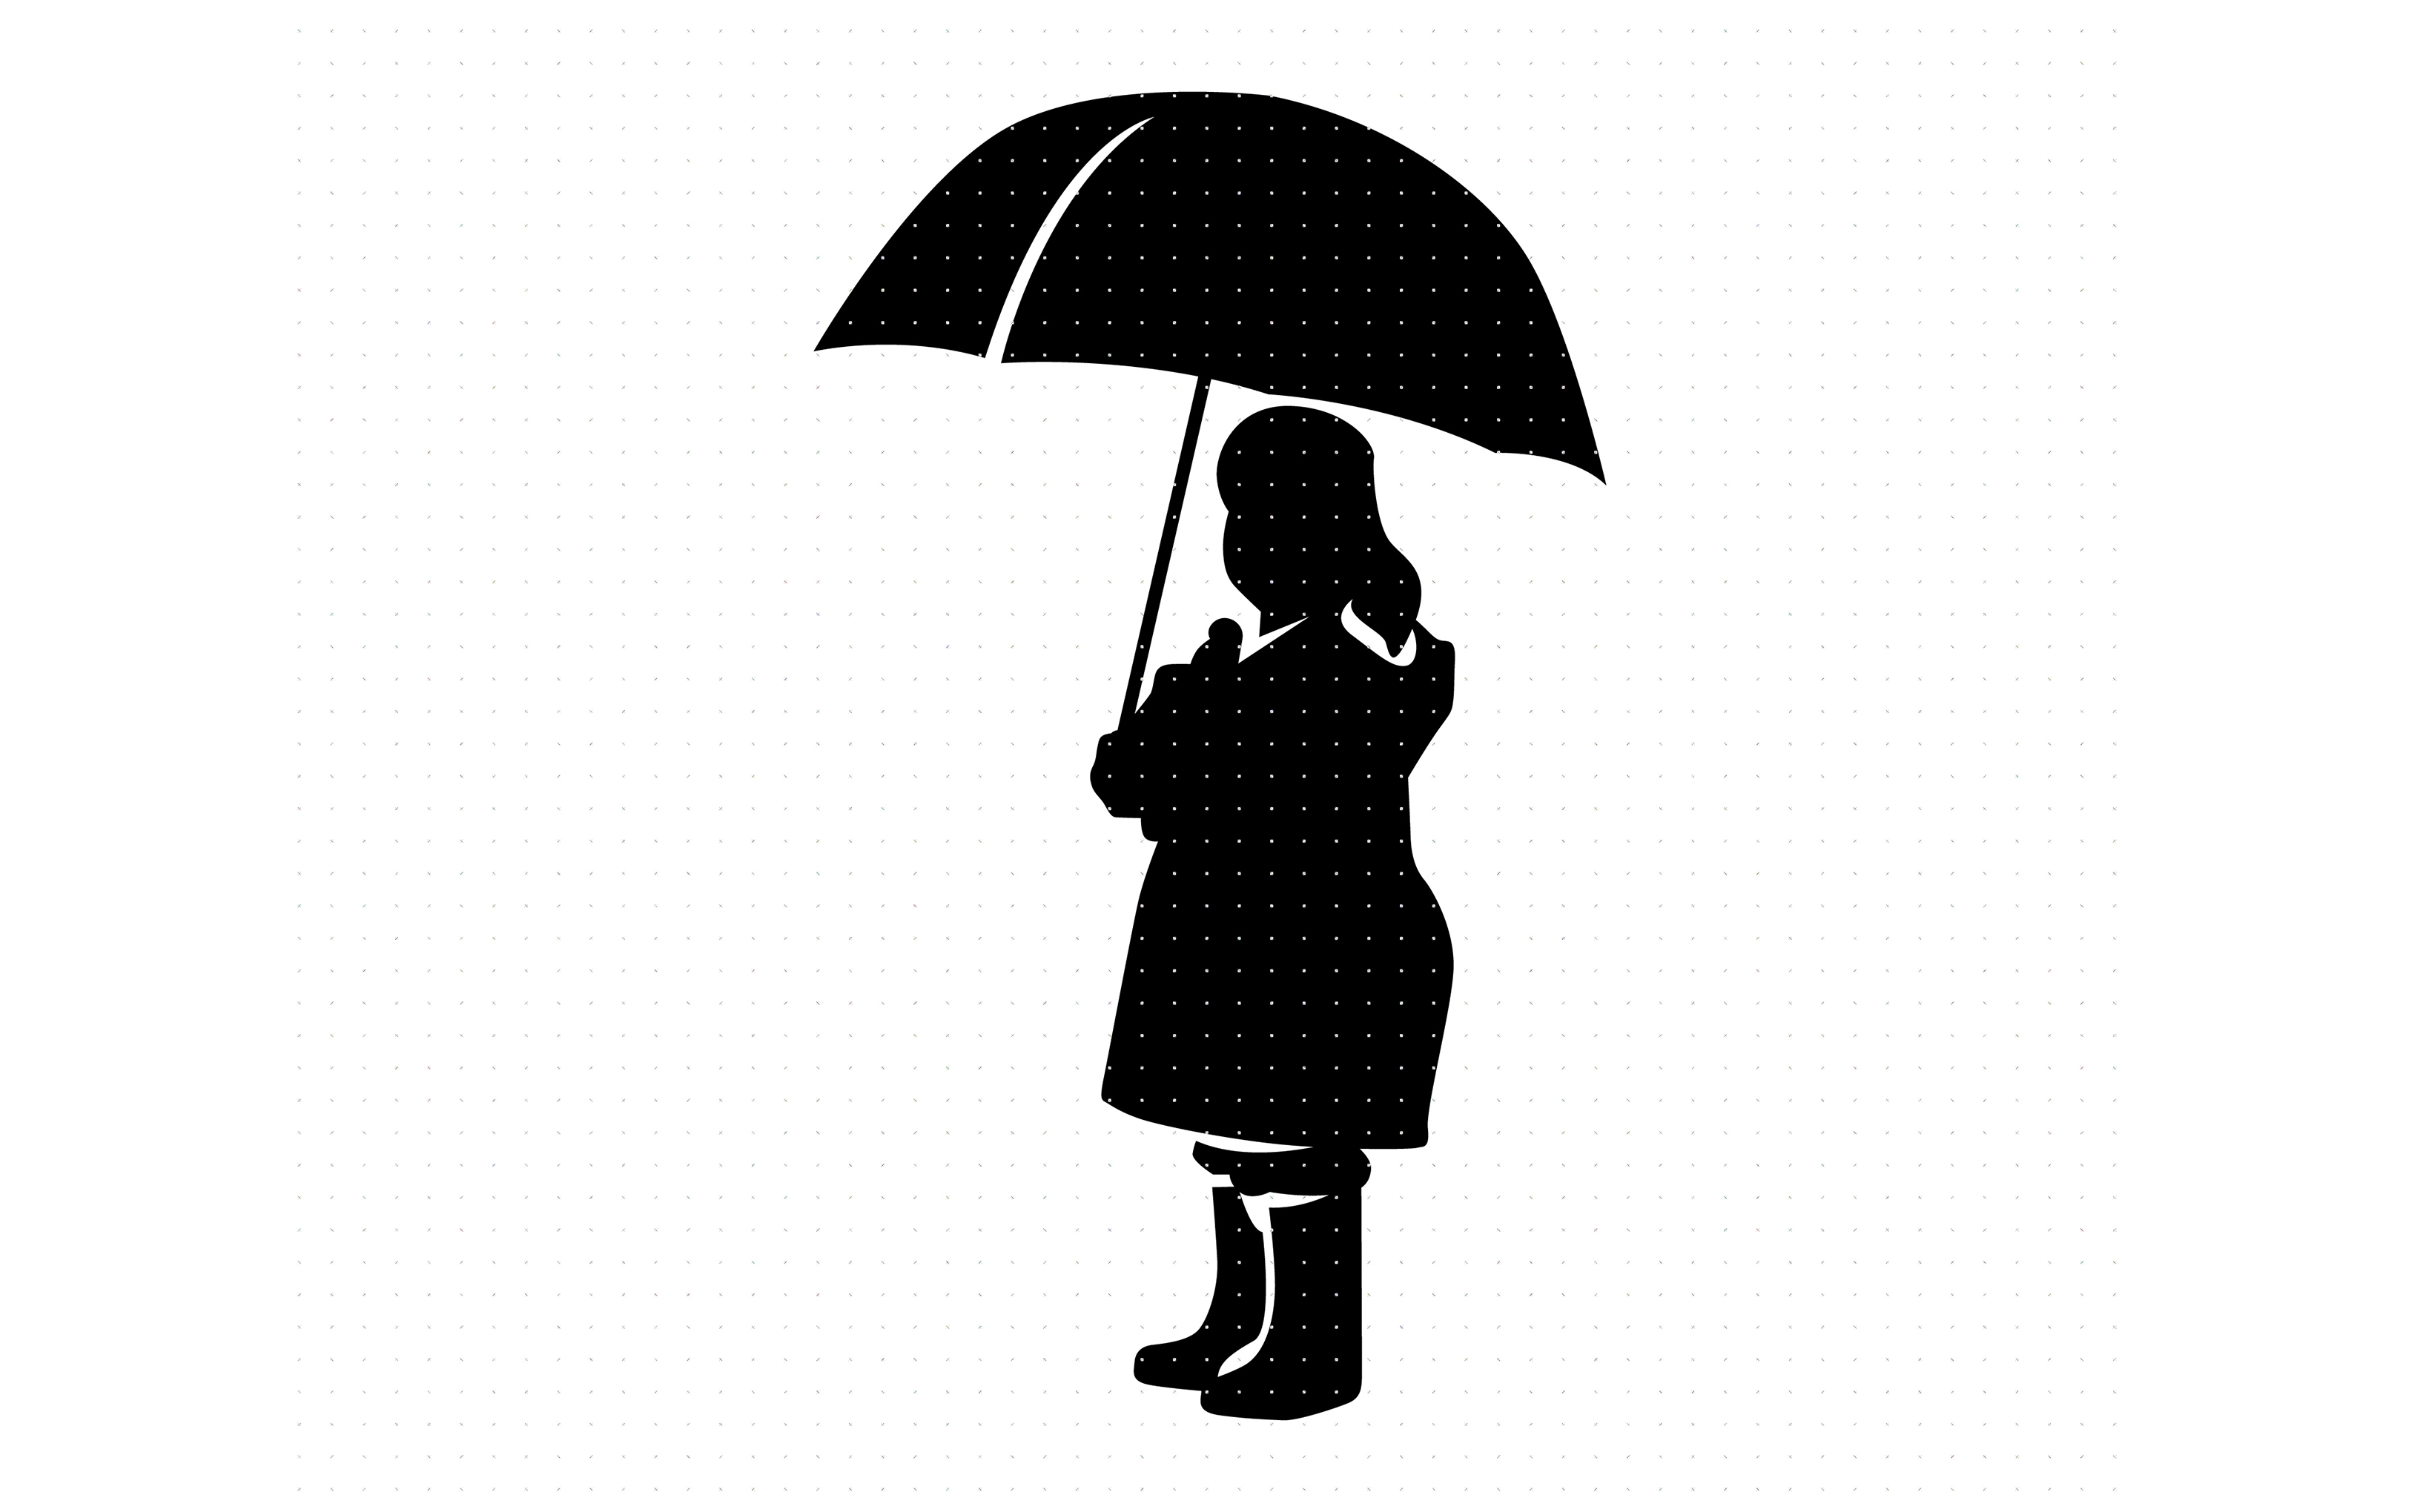 little girl under umbrella silhouette